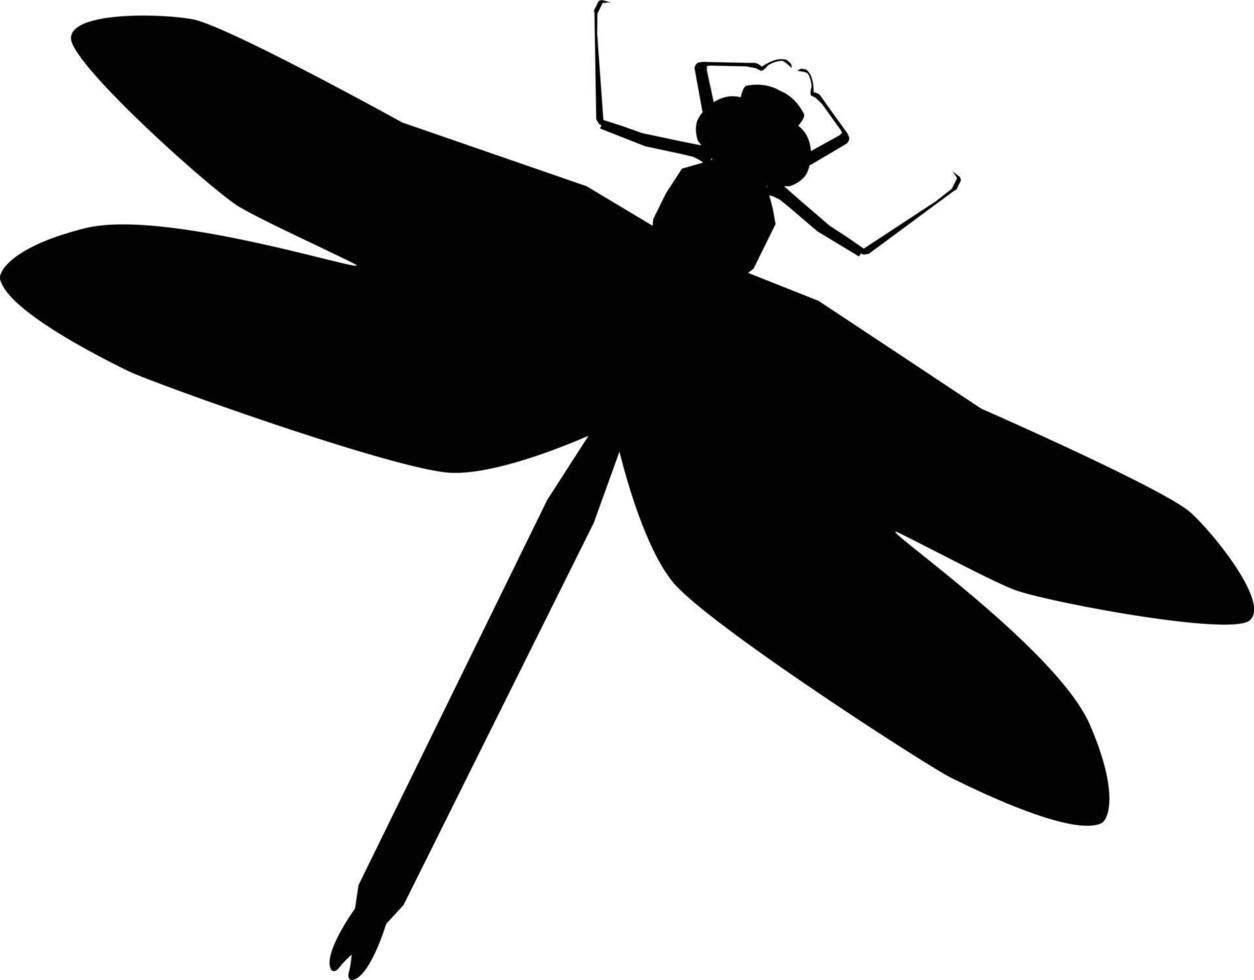 icono de libélula negra sobre fondo blanco. signo de libélulas. estilo plano vector